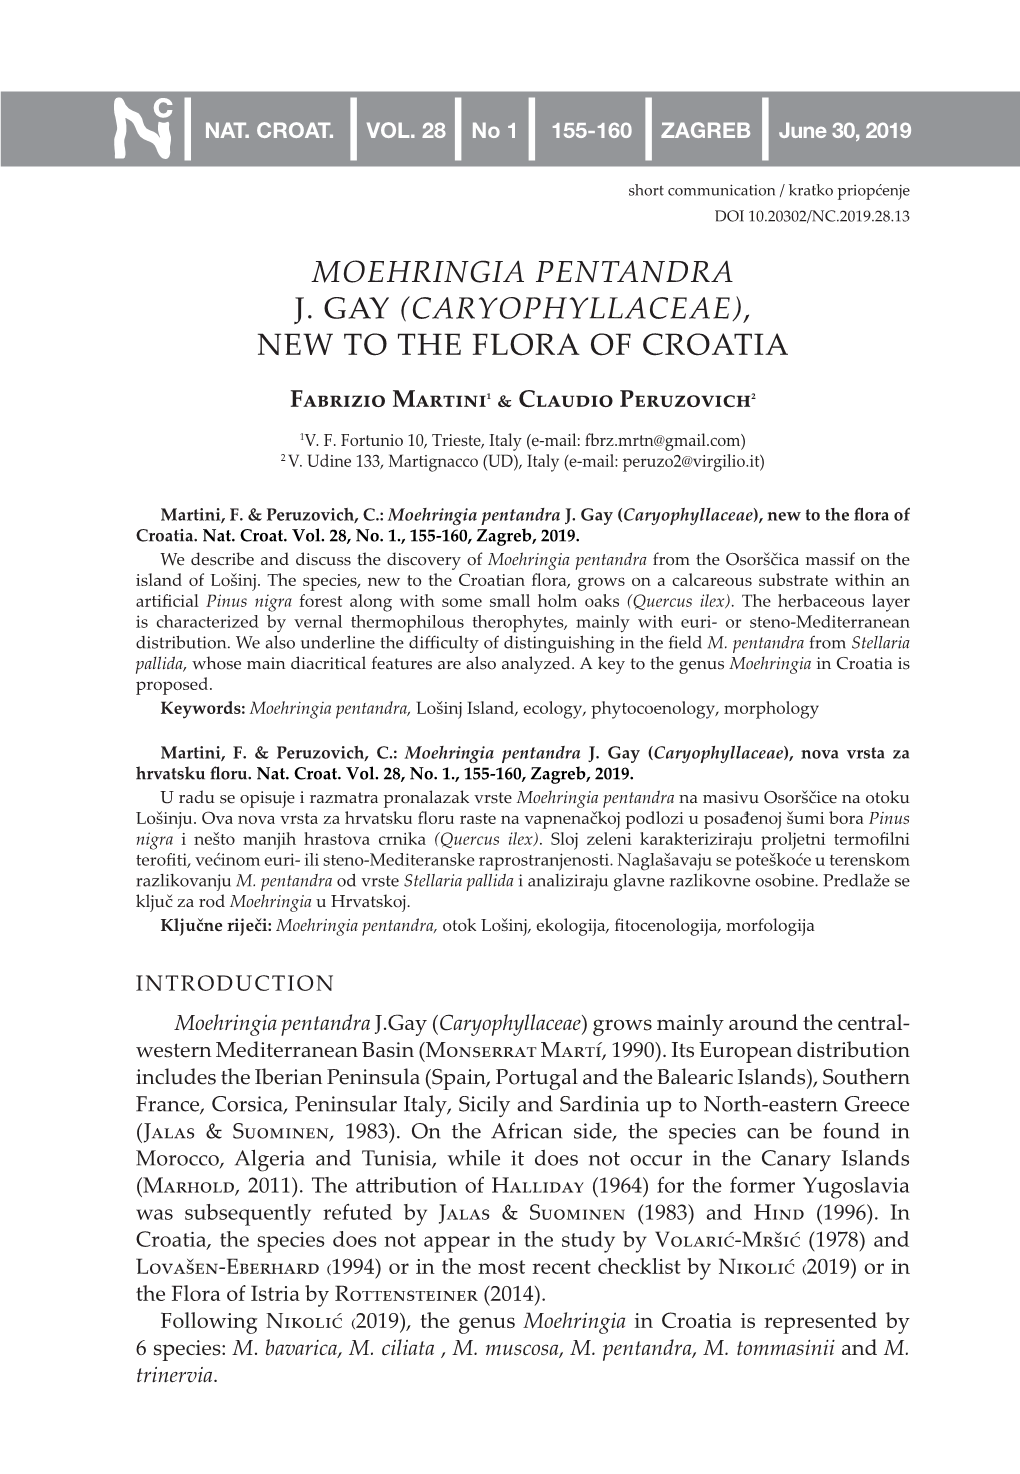 Moehringia Pentandra J. Gay (Caryophyllaceae), New to the Flora of Croatia